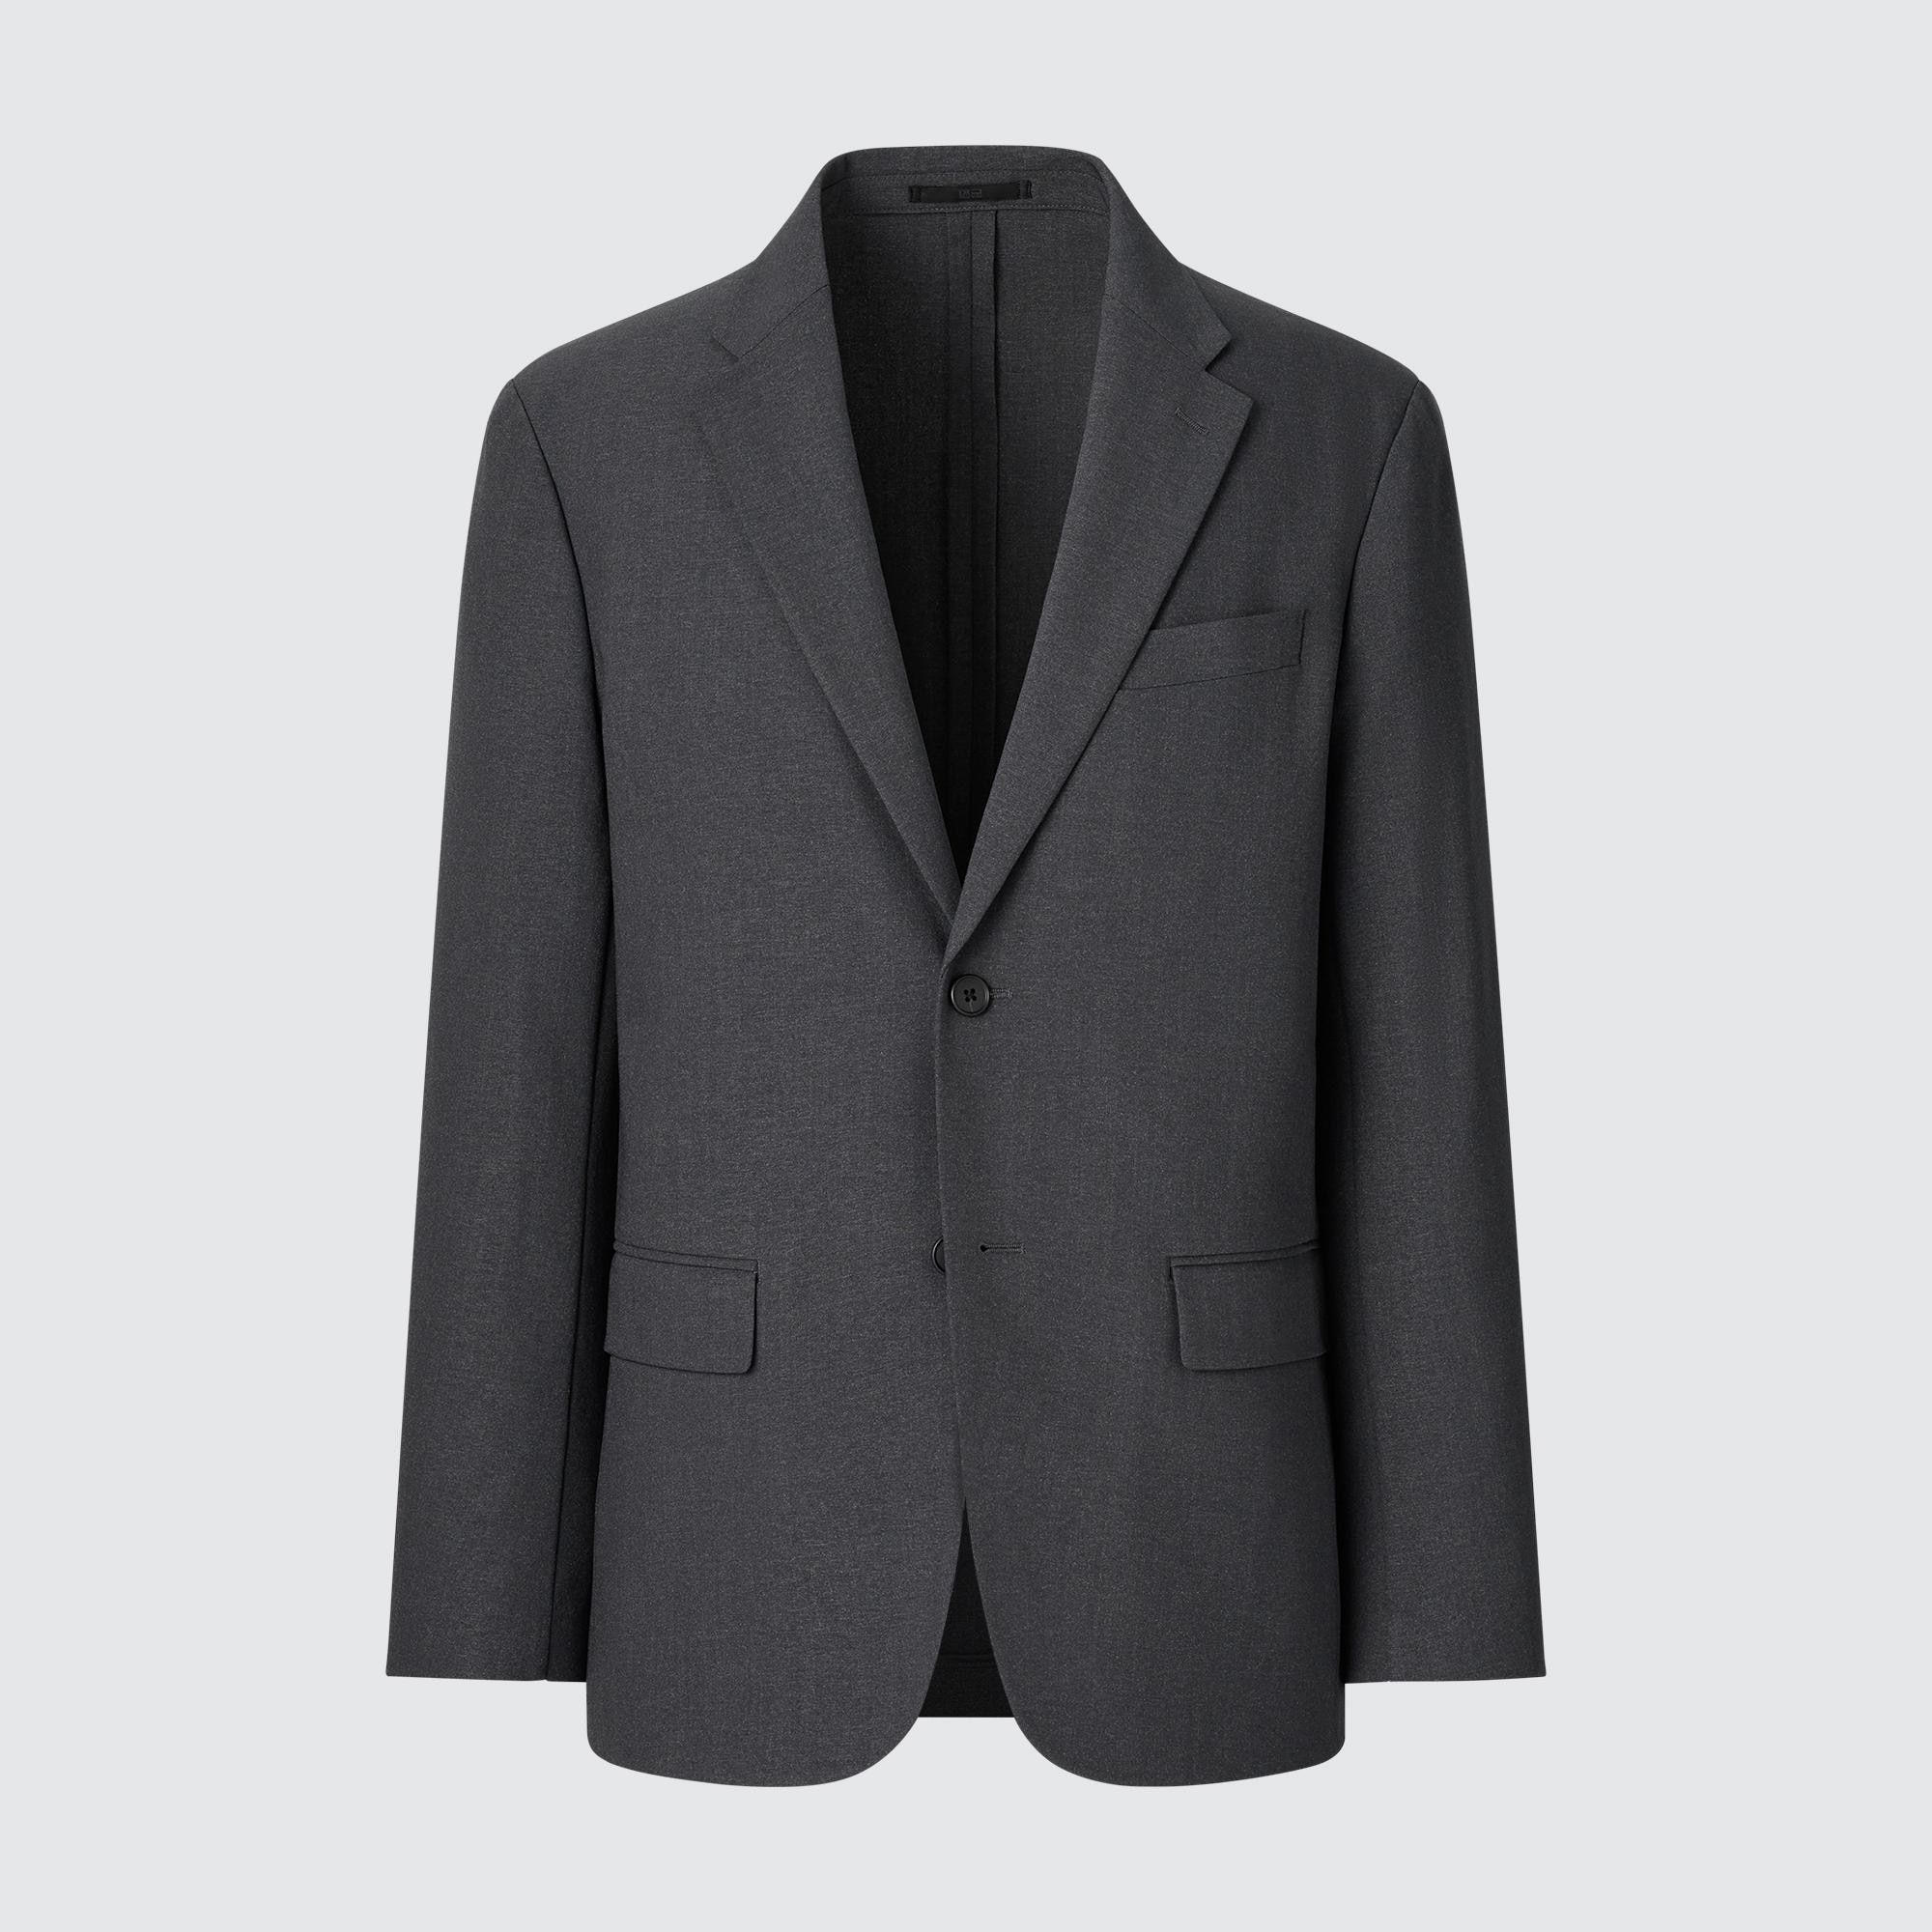 AirSense Ultra Light Wool-Look Jacket | UNIQLO